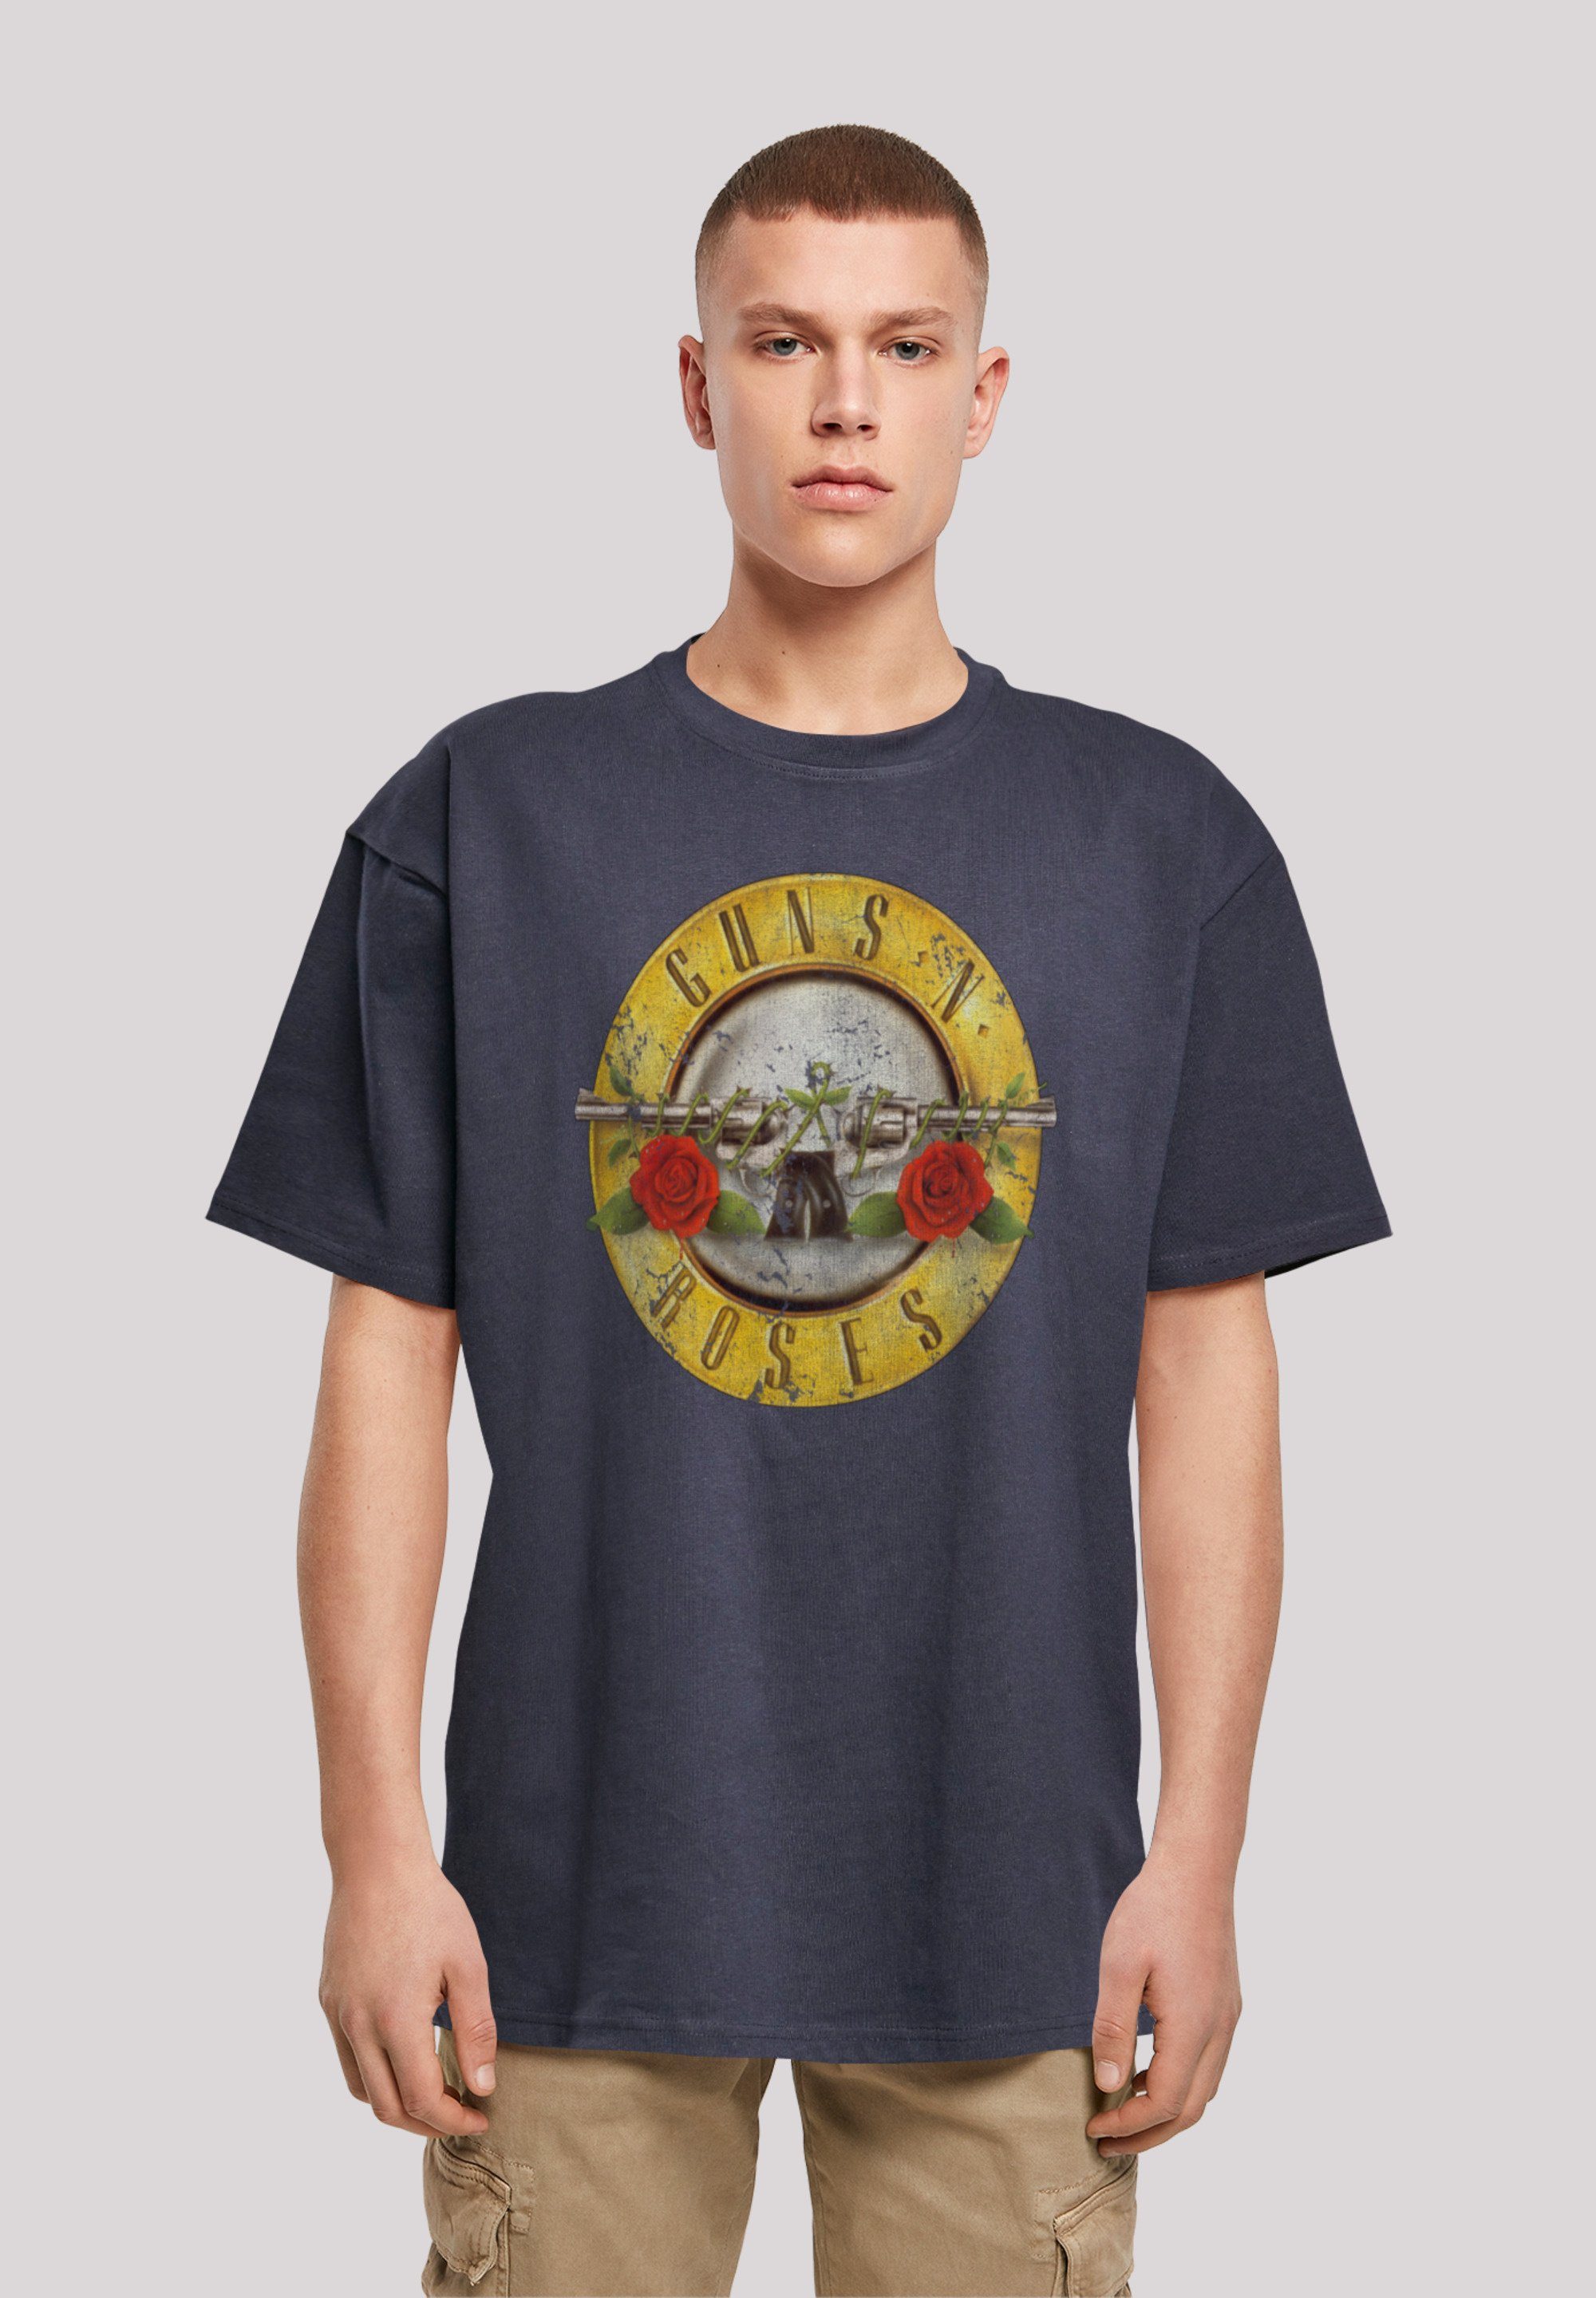 Classic T-Shirt navy Roses Logo 'n' Guns F4NT4STIC Black (Distressed) Band Vintage Print